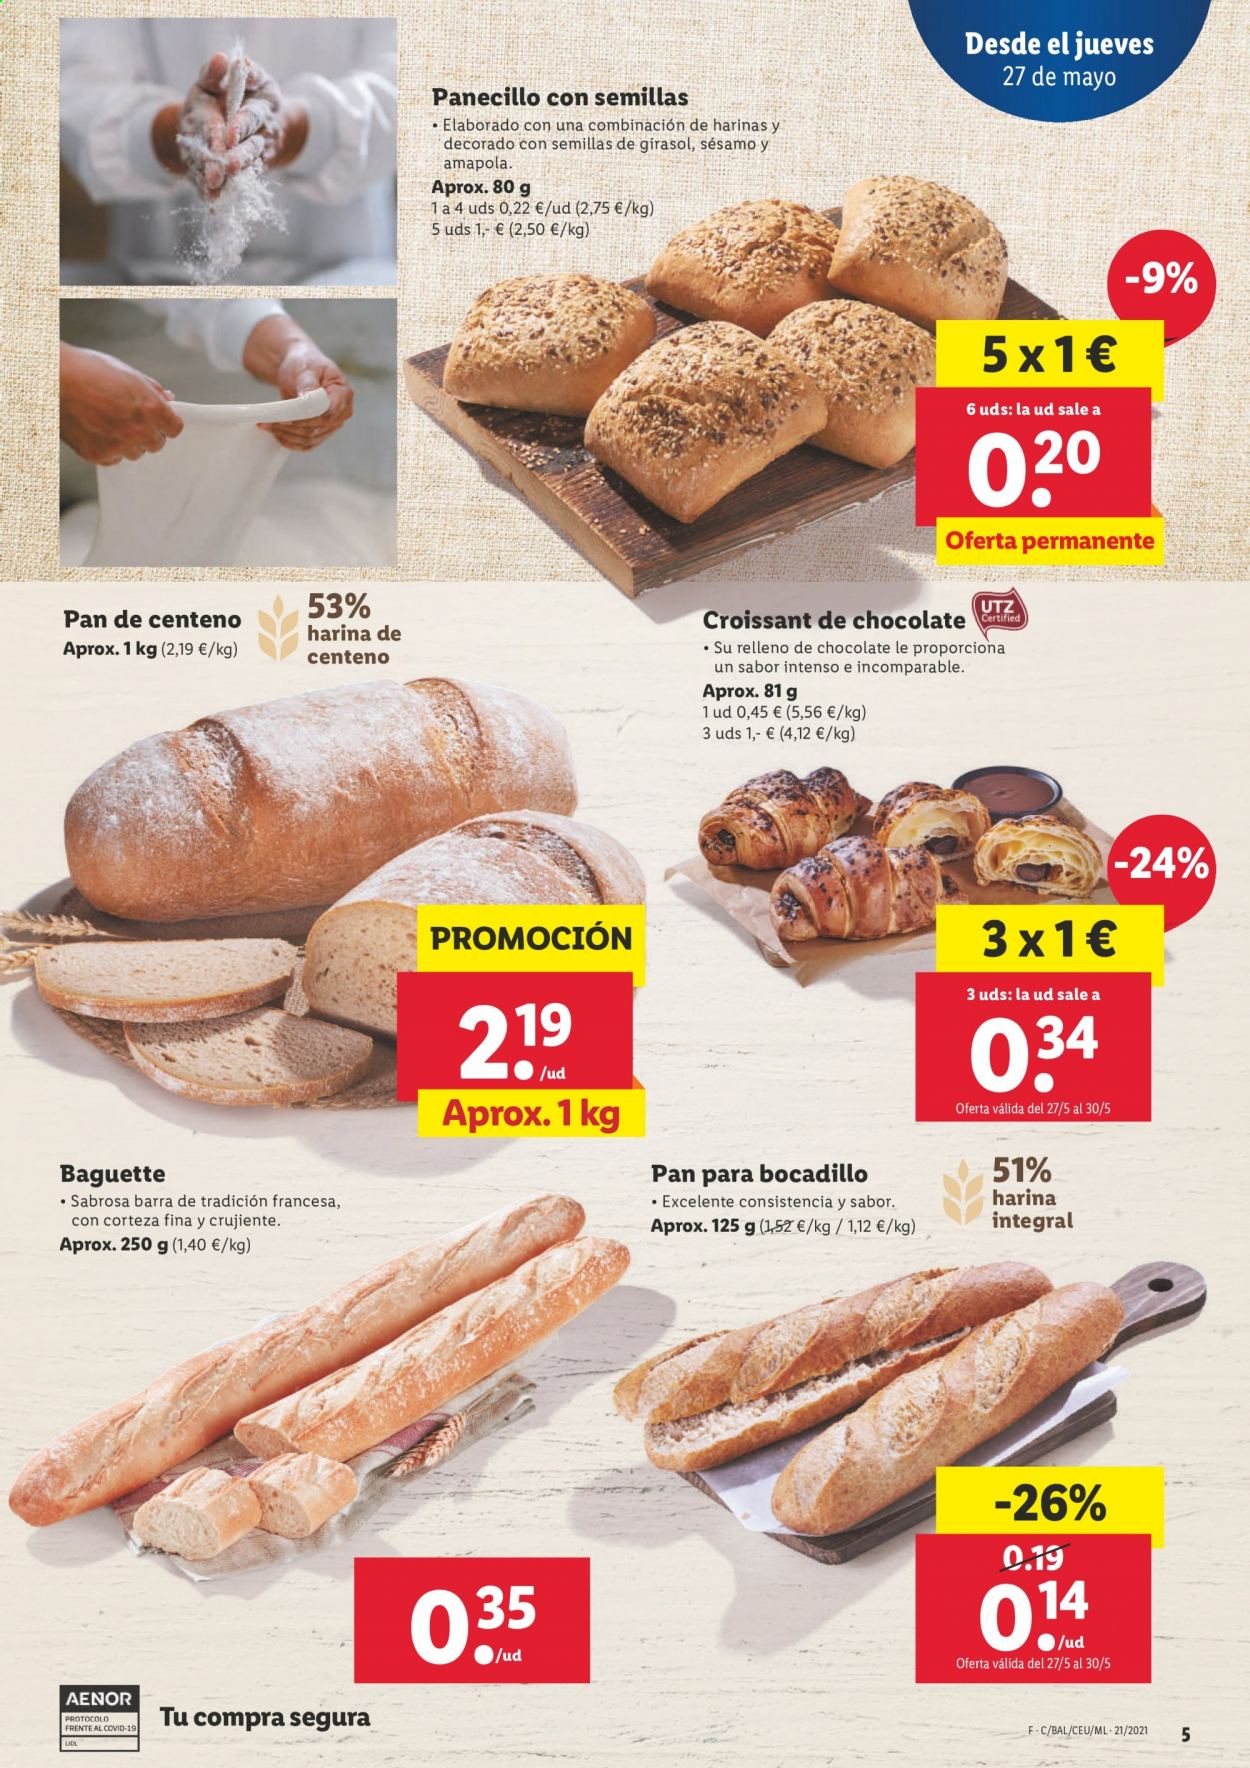 thumbnail - Folleto actual Lidl - 27/05/21 - 02/06/21 - Ventas - baguette, pan, panecillo, pan de centeno, croissant, harina. Página 5.